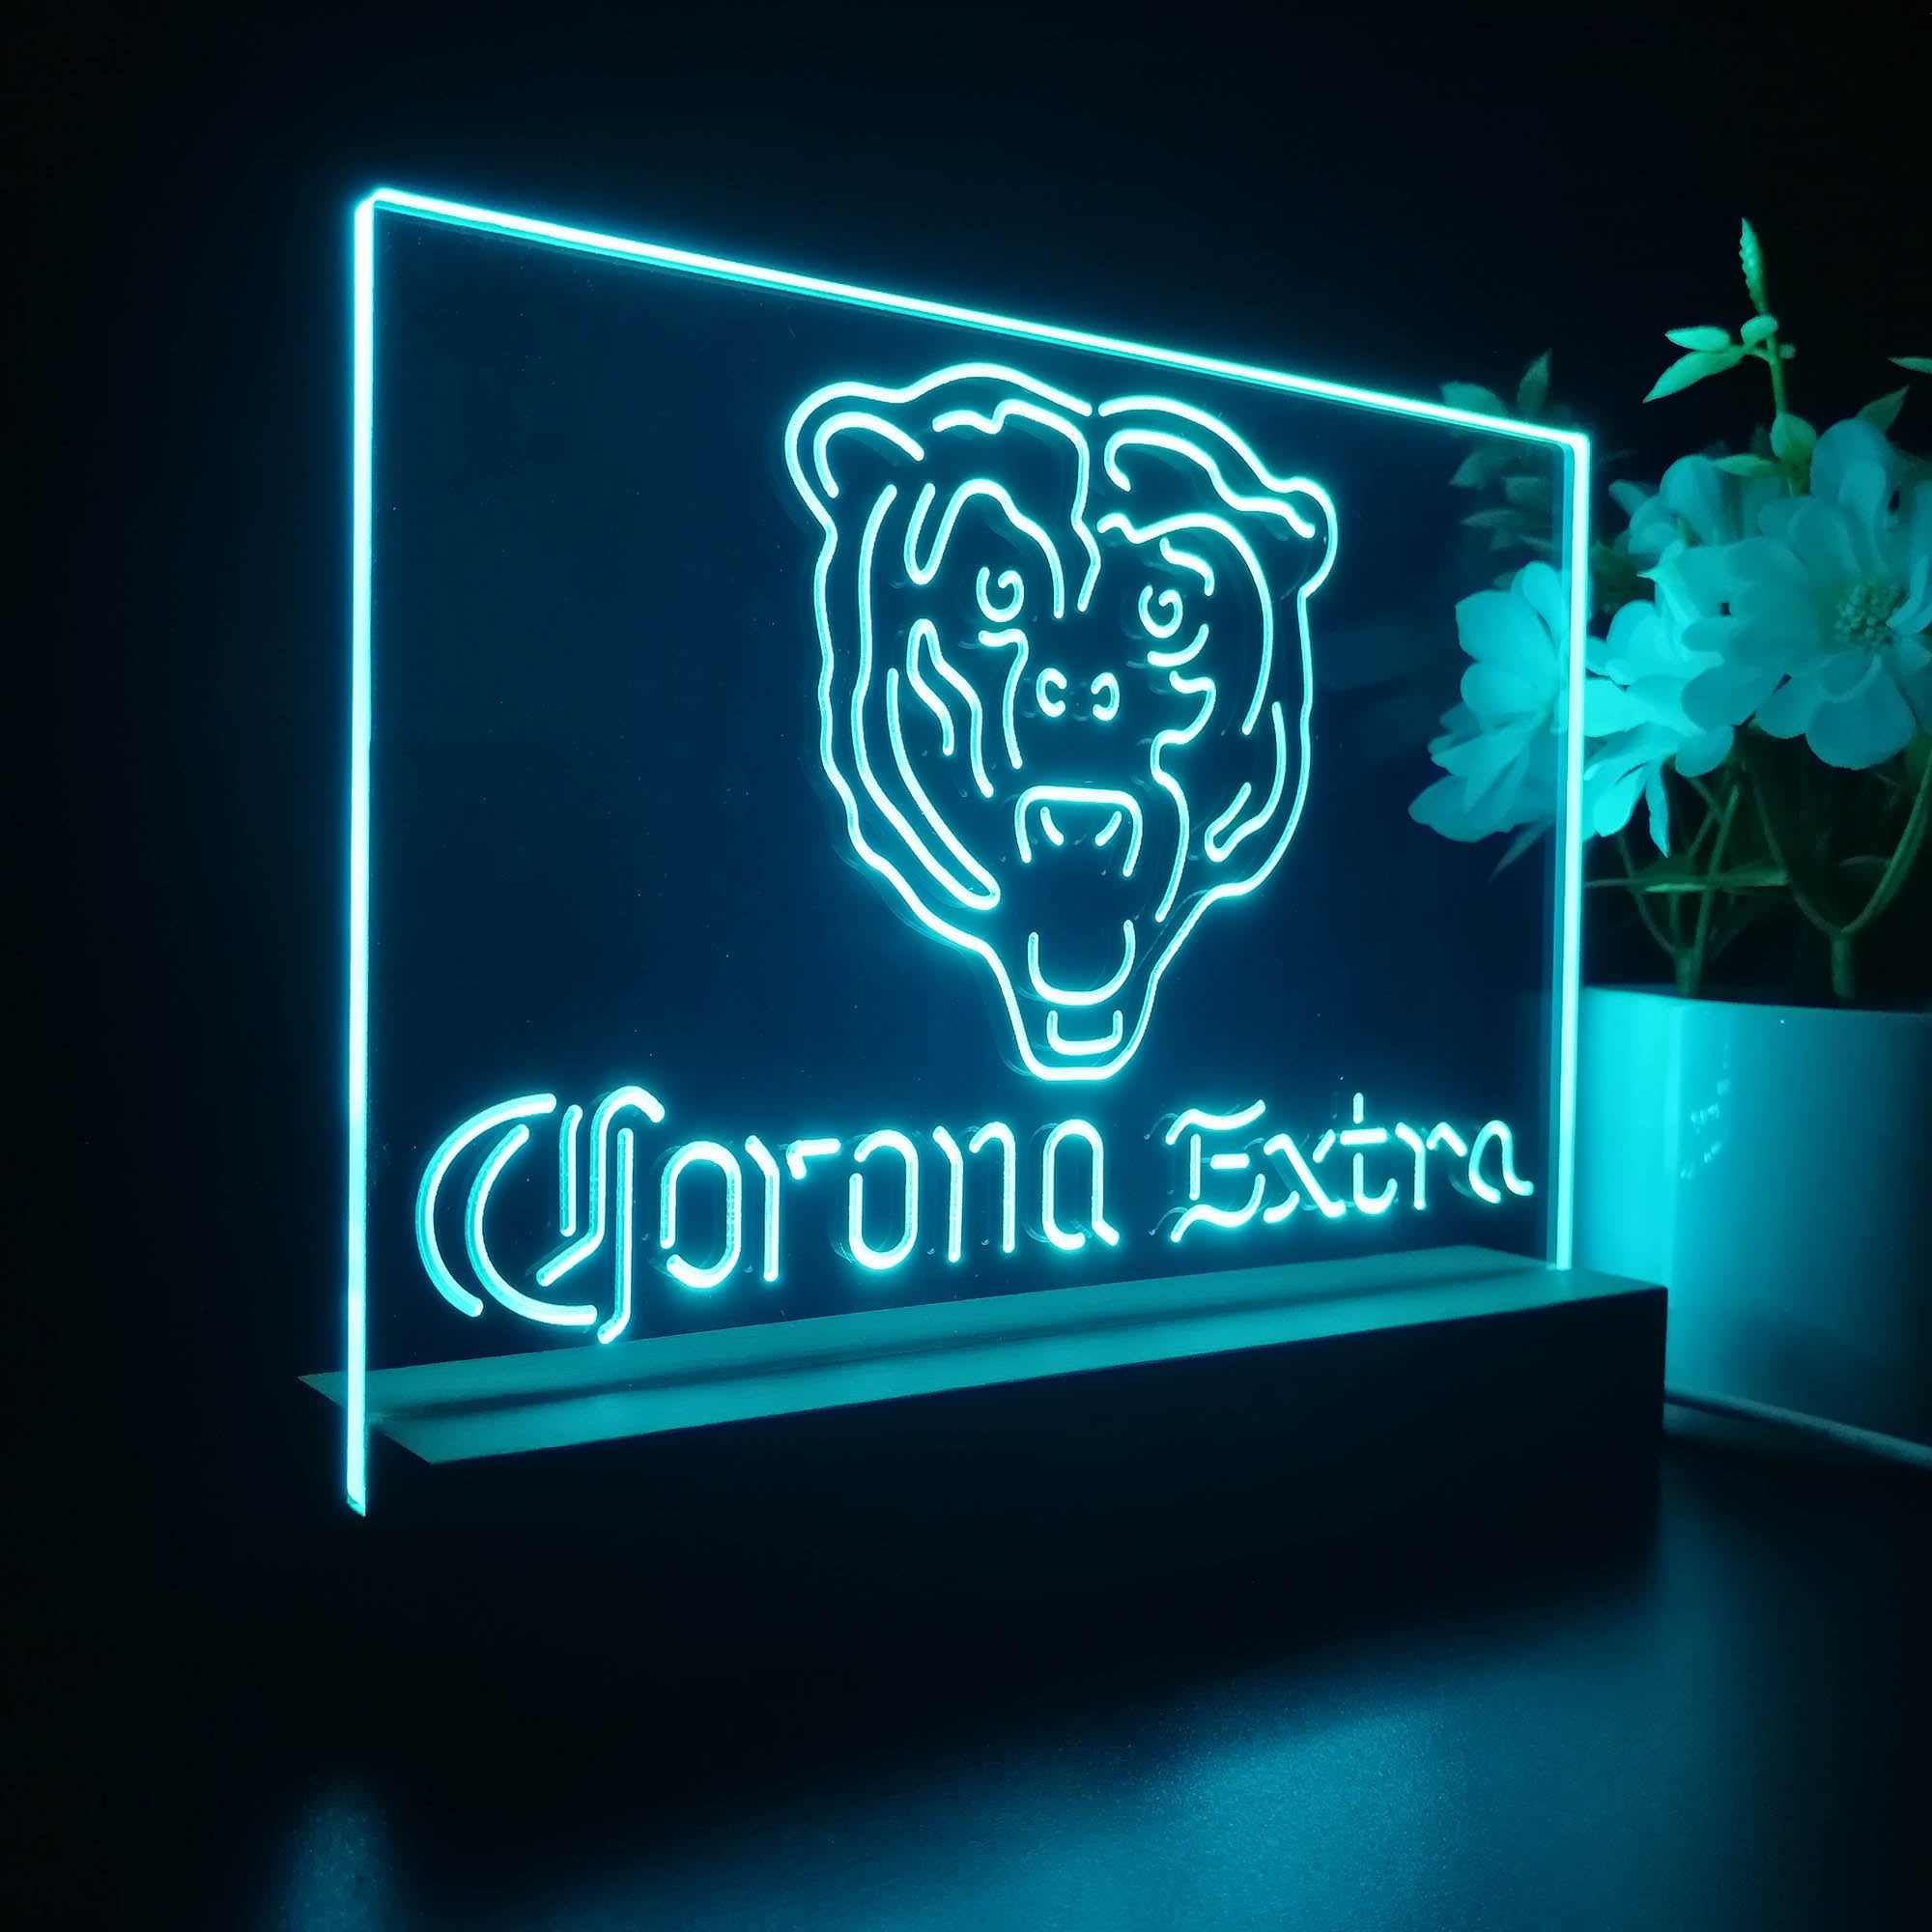 Corona Extra Bar Chicago Bears Est. 1920 Night Light Pub Bar Lamp